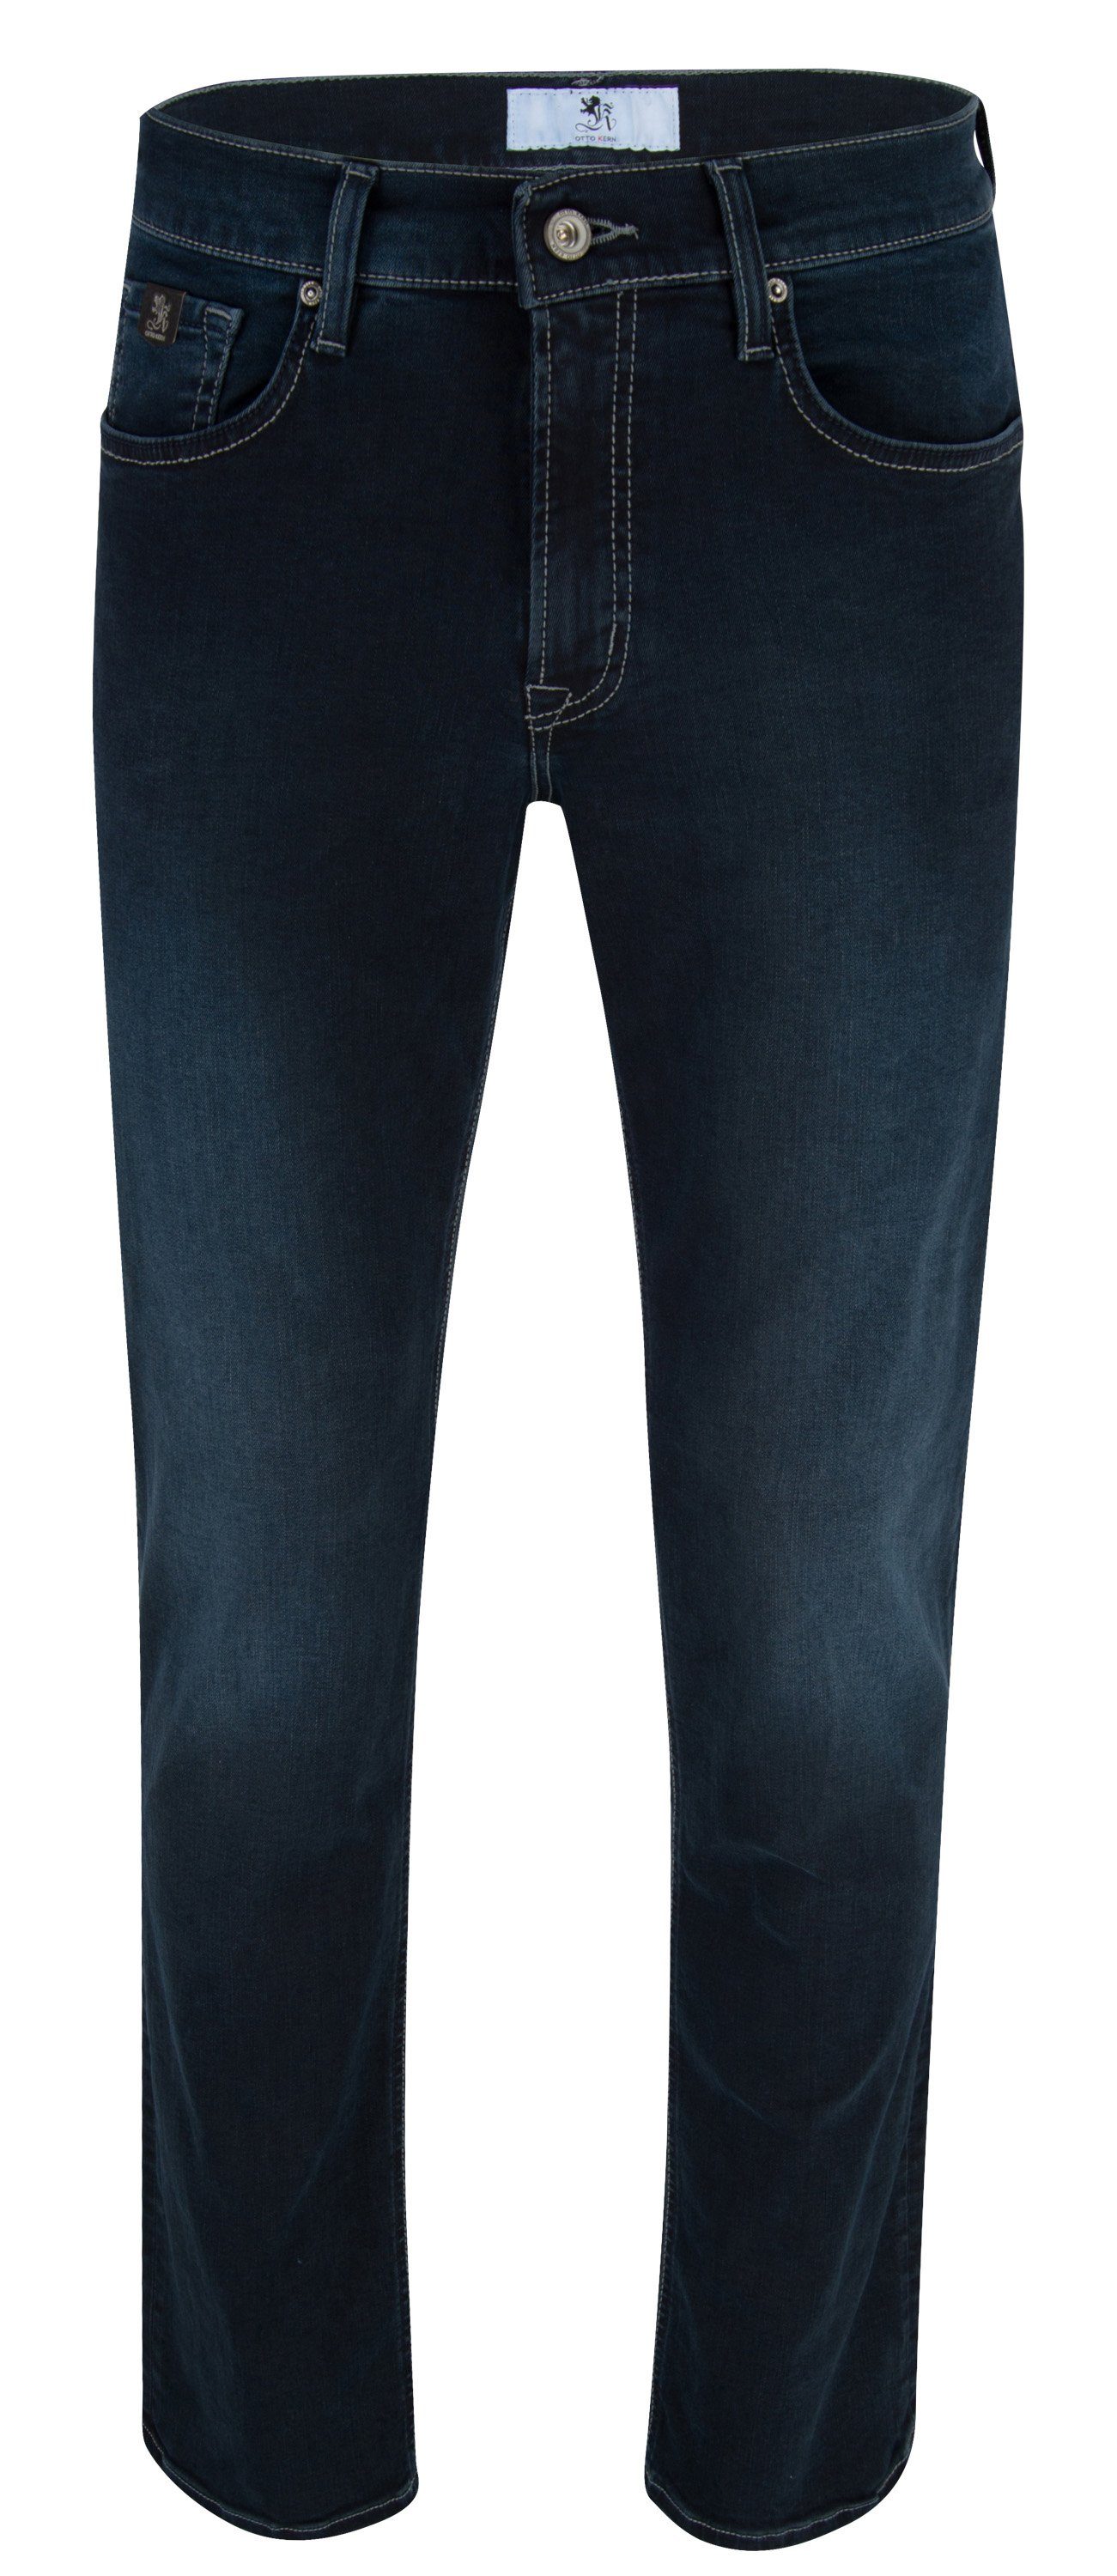  Kern 5-Pocket-Jeans OTTO KERN JOHN blue black used 67001 6832.6802